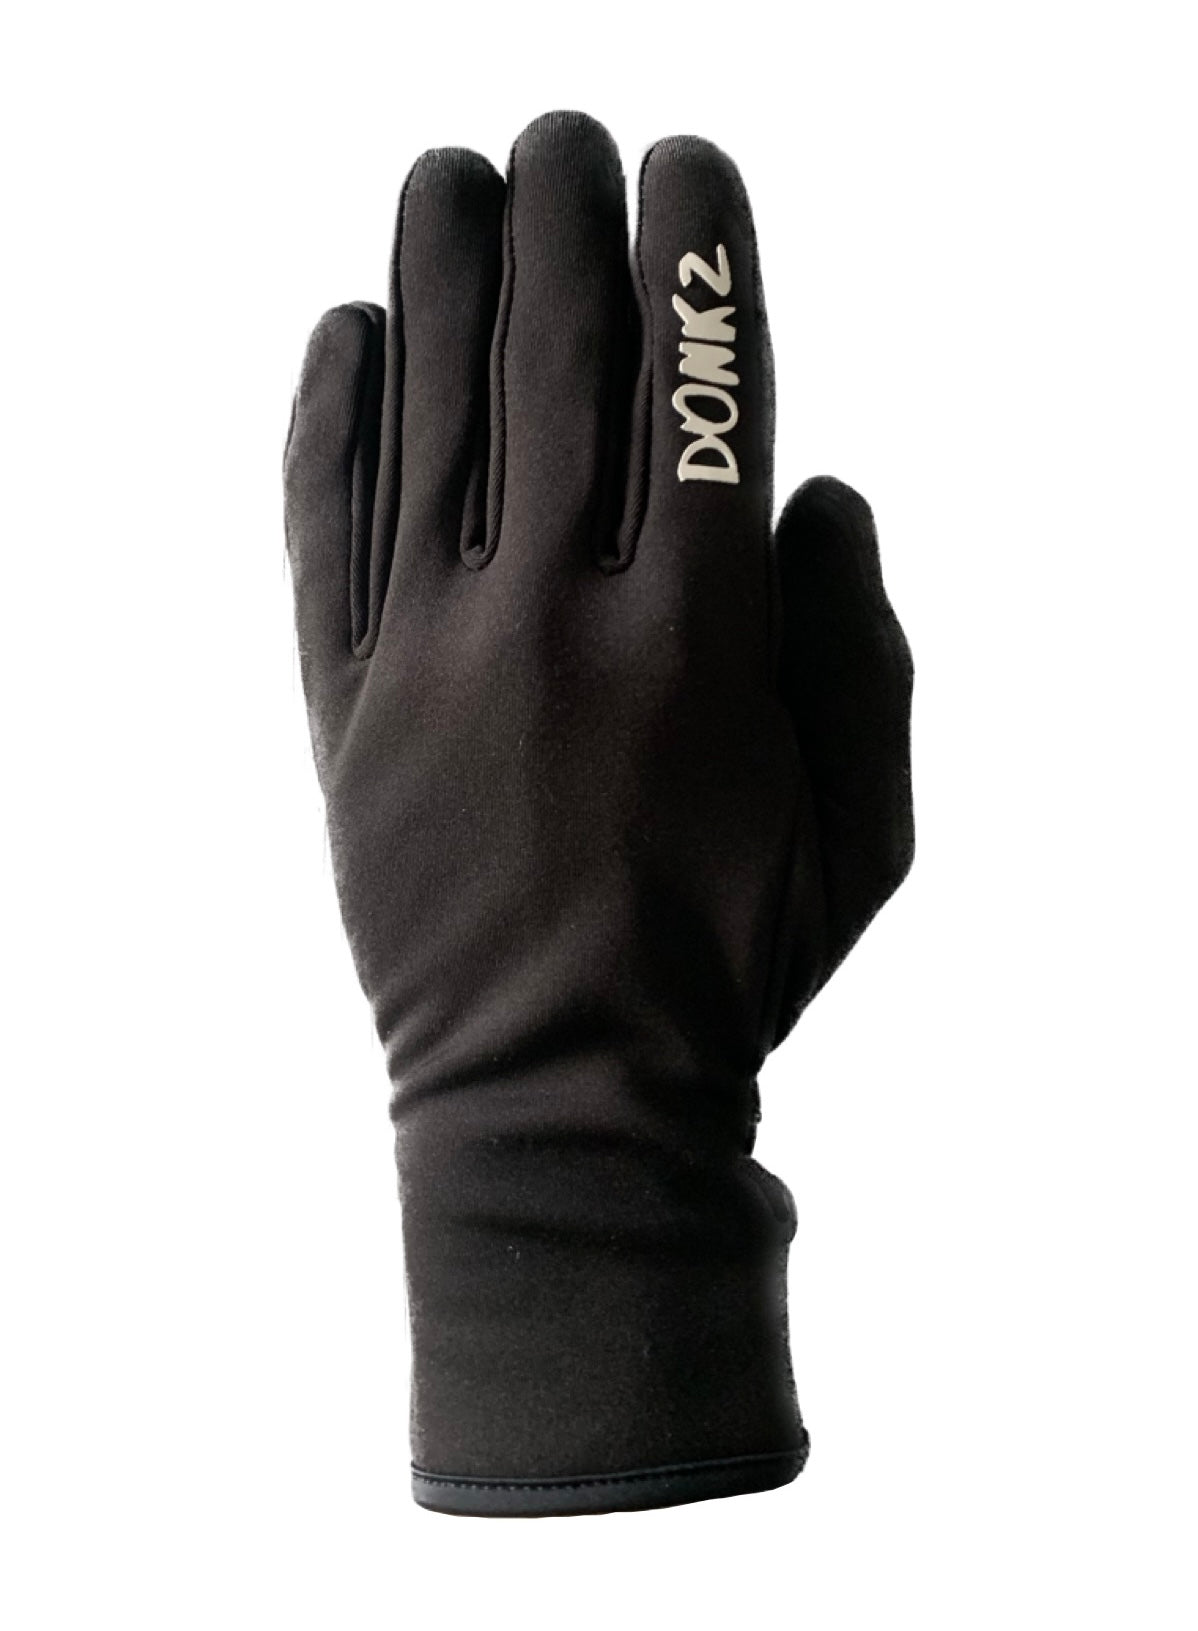 Black warm Donkz Racing off road gloves